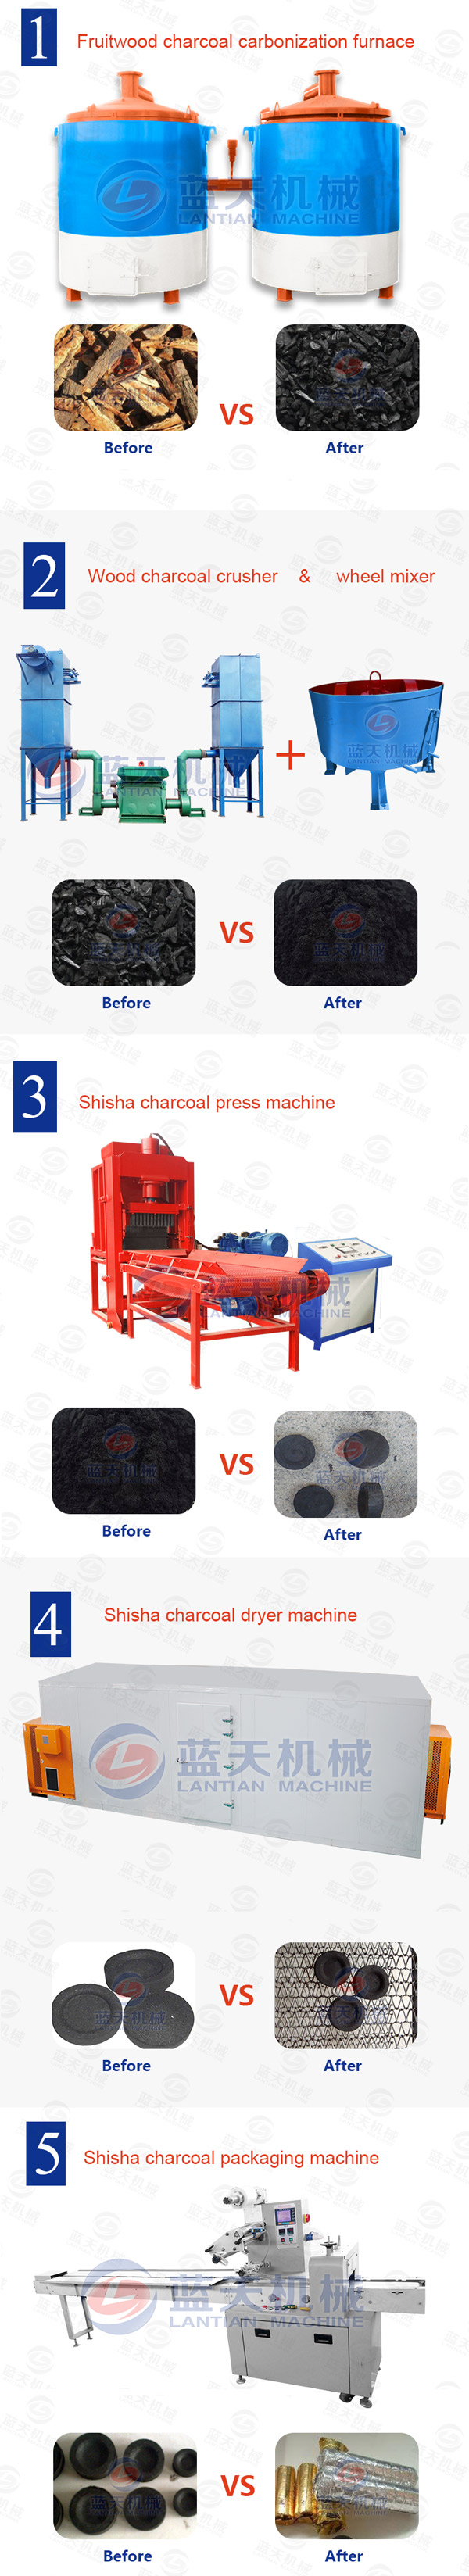 Shisha Charcoal Briquette Packing Machine